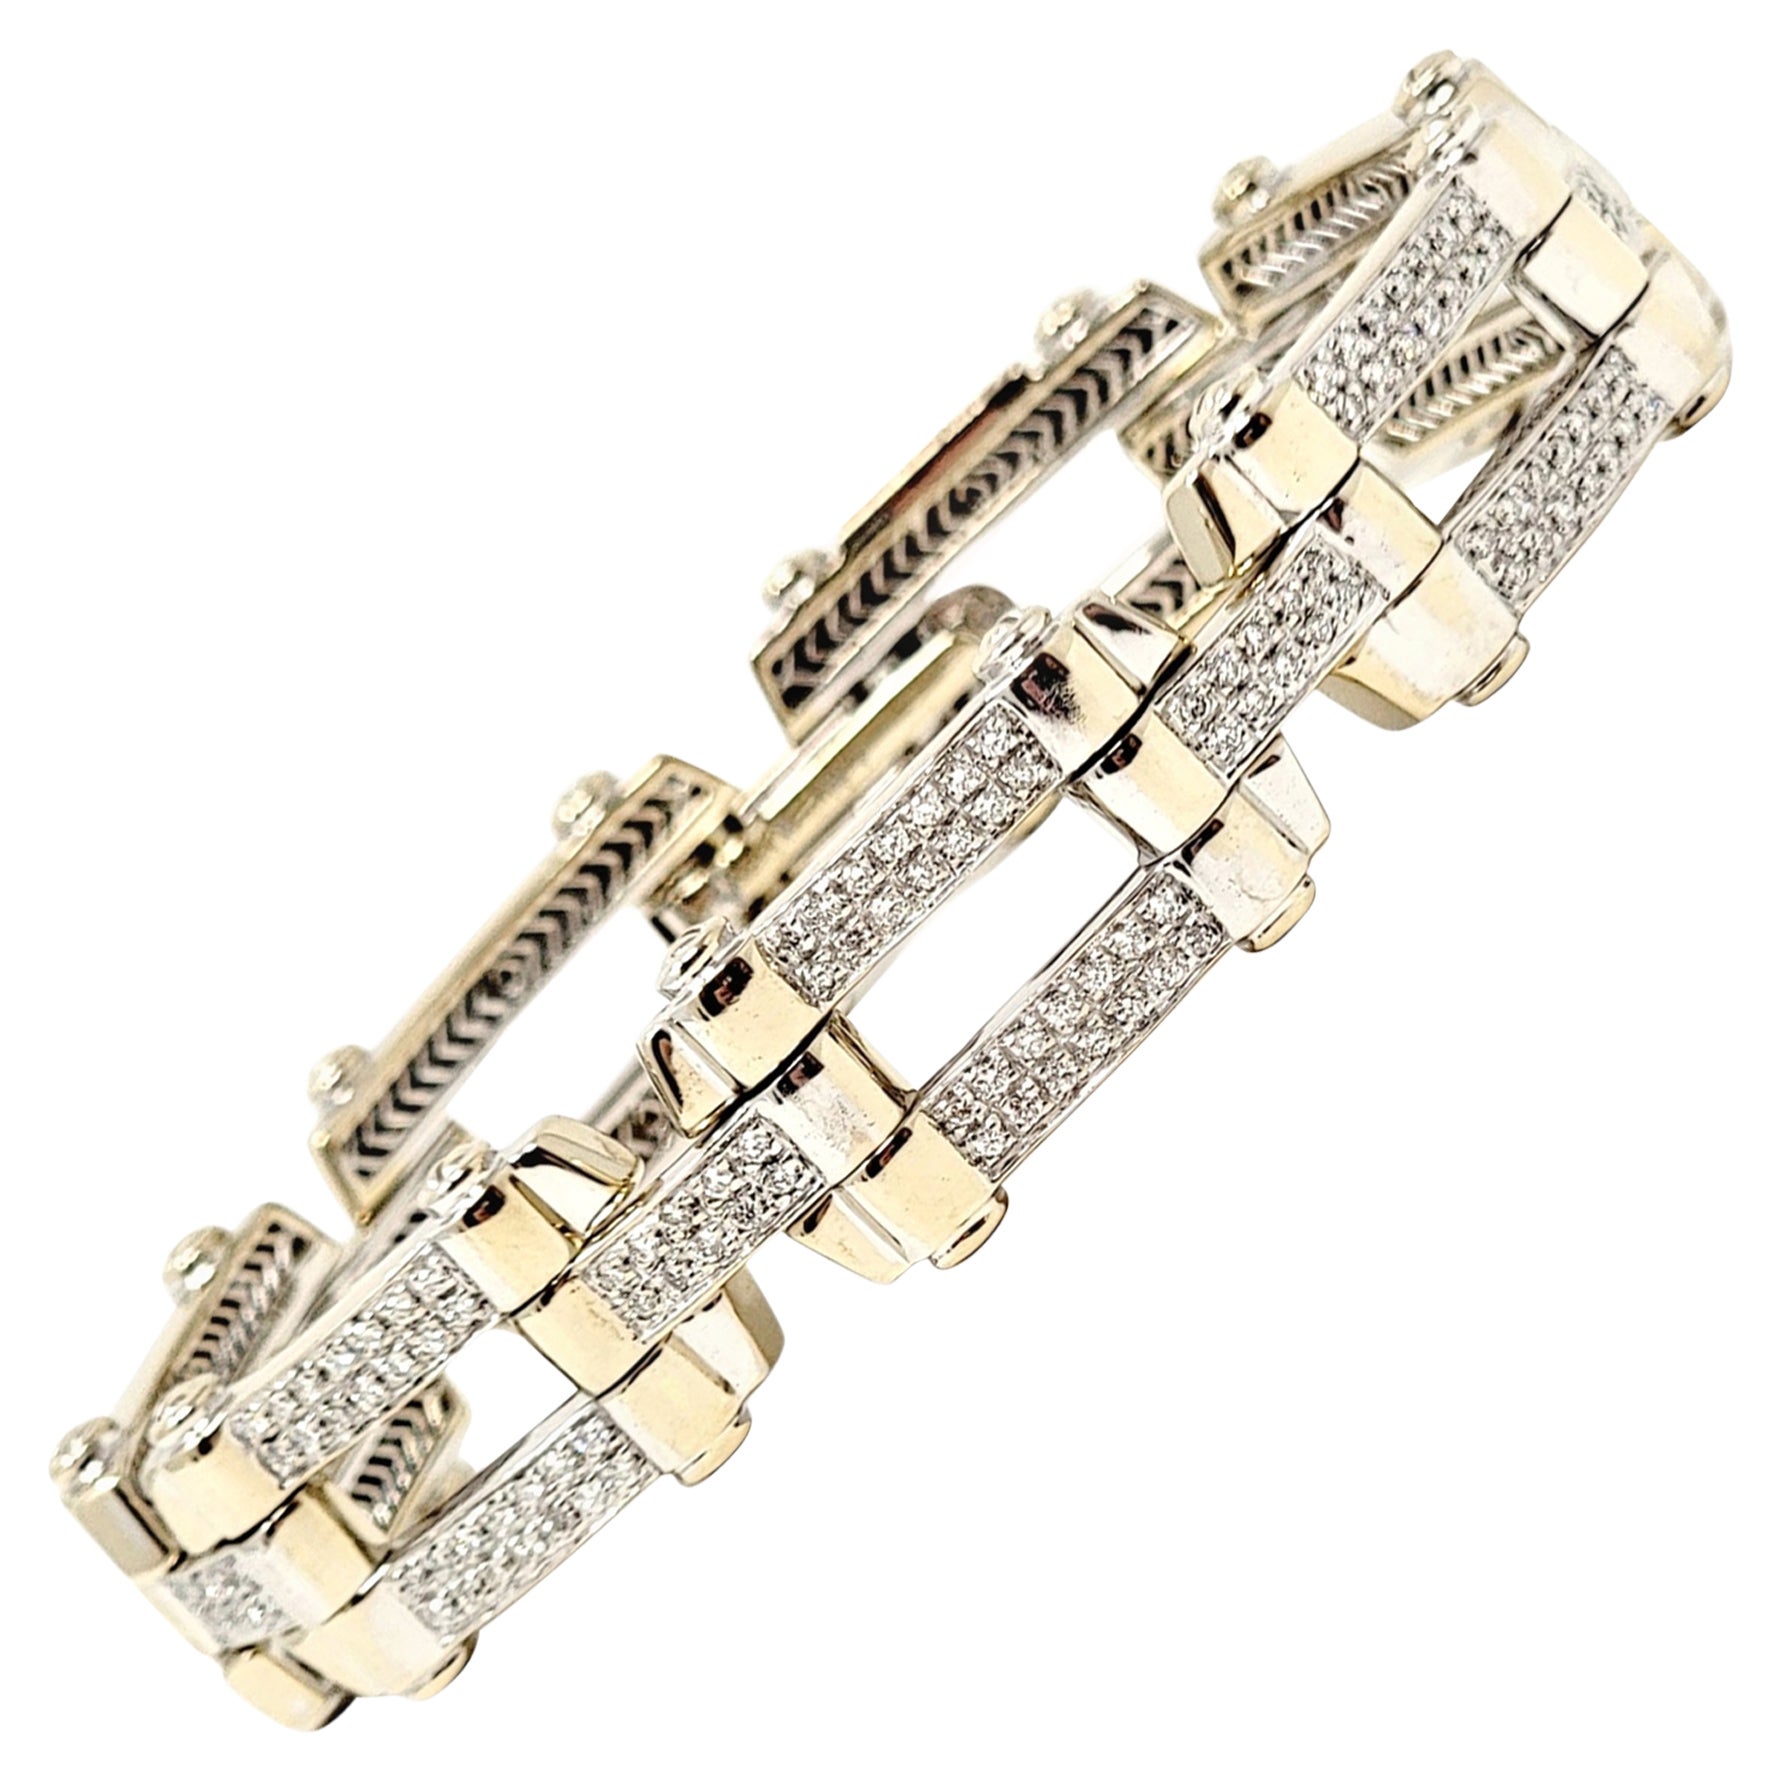 Philippe Charriol Pave Diamond Screw Link Bracelet in 18 Karat White Gold